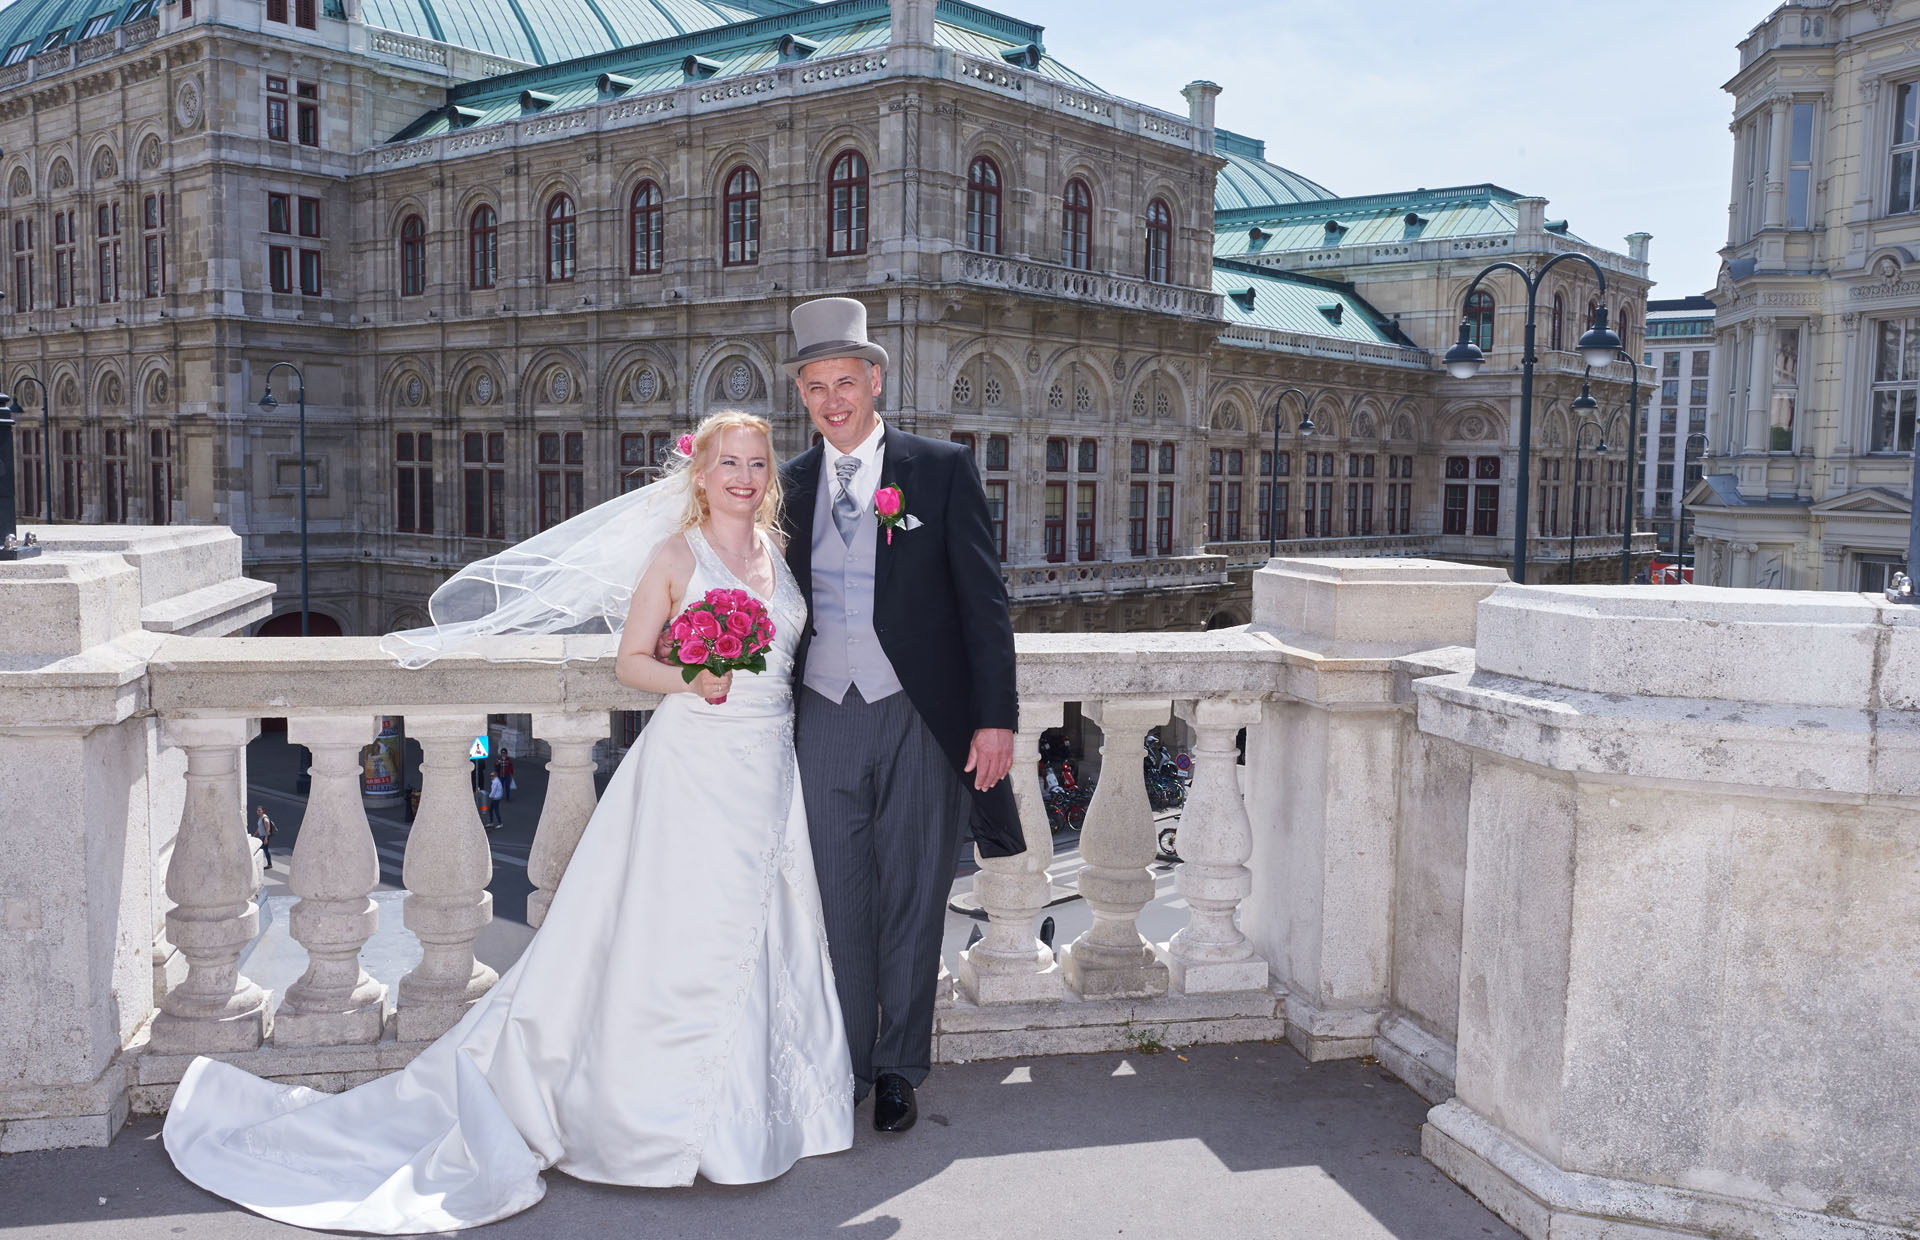 Hochzeitsfotograf Wien | Harald C. Sahling 0.48483100 1653549025